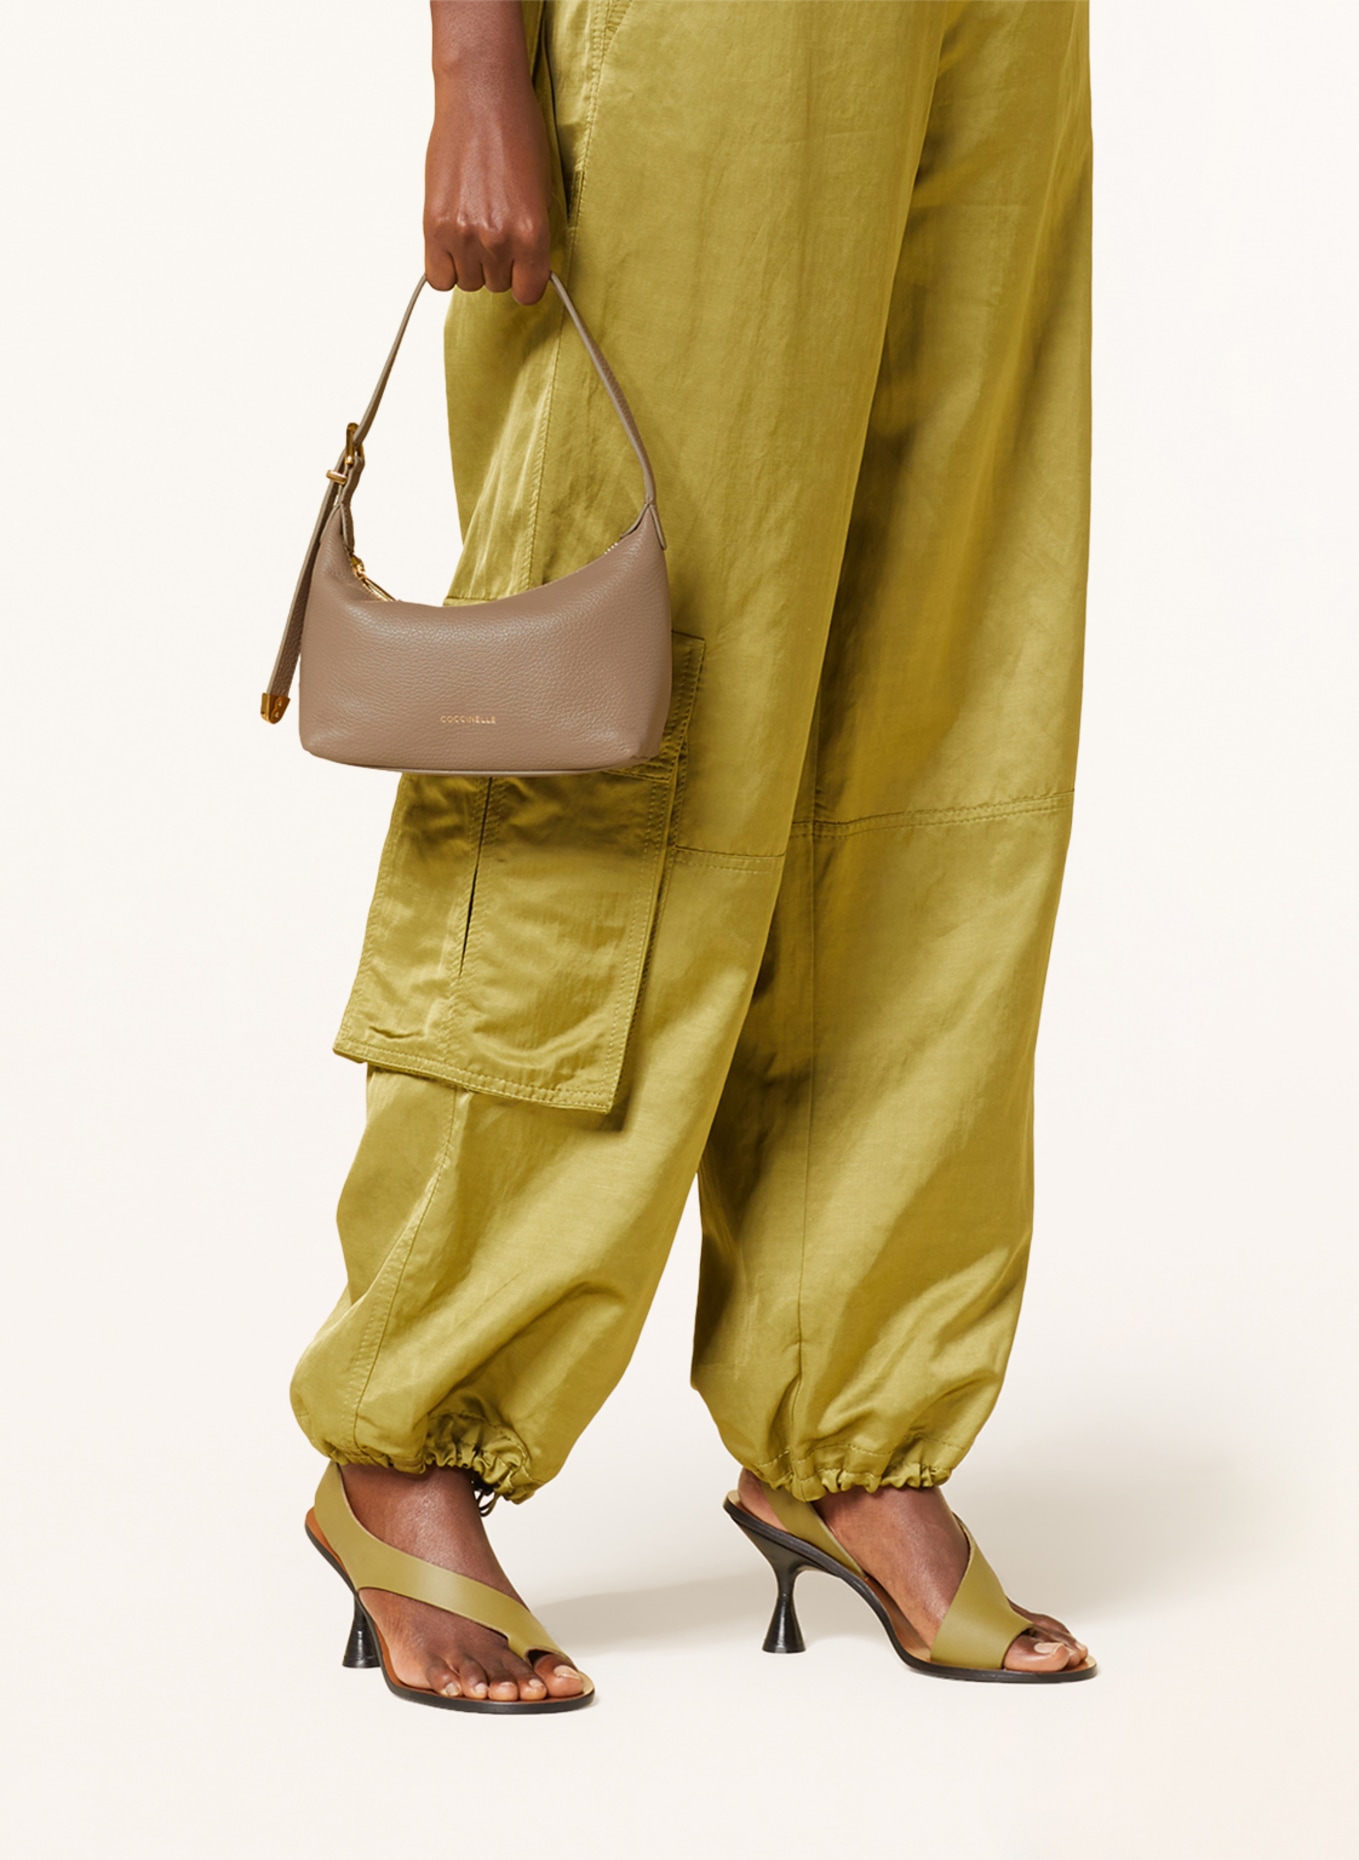 COCCINELLE Handbag, Color: TAUPE (Image 4)